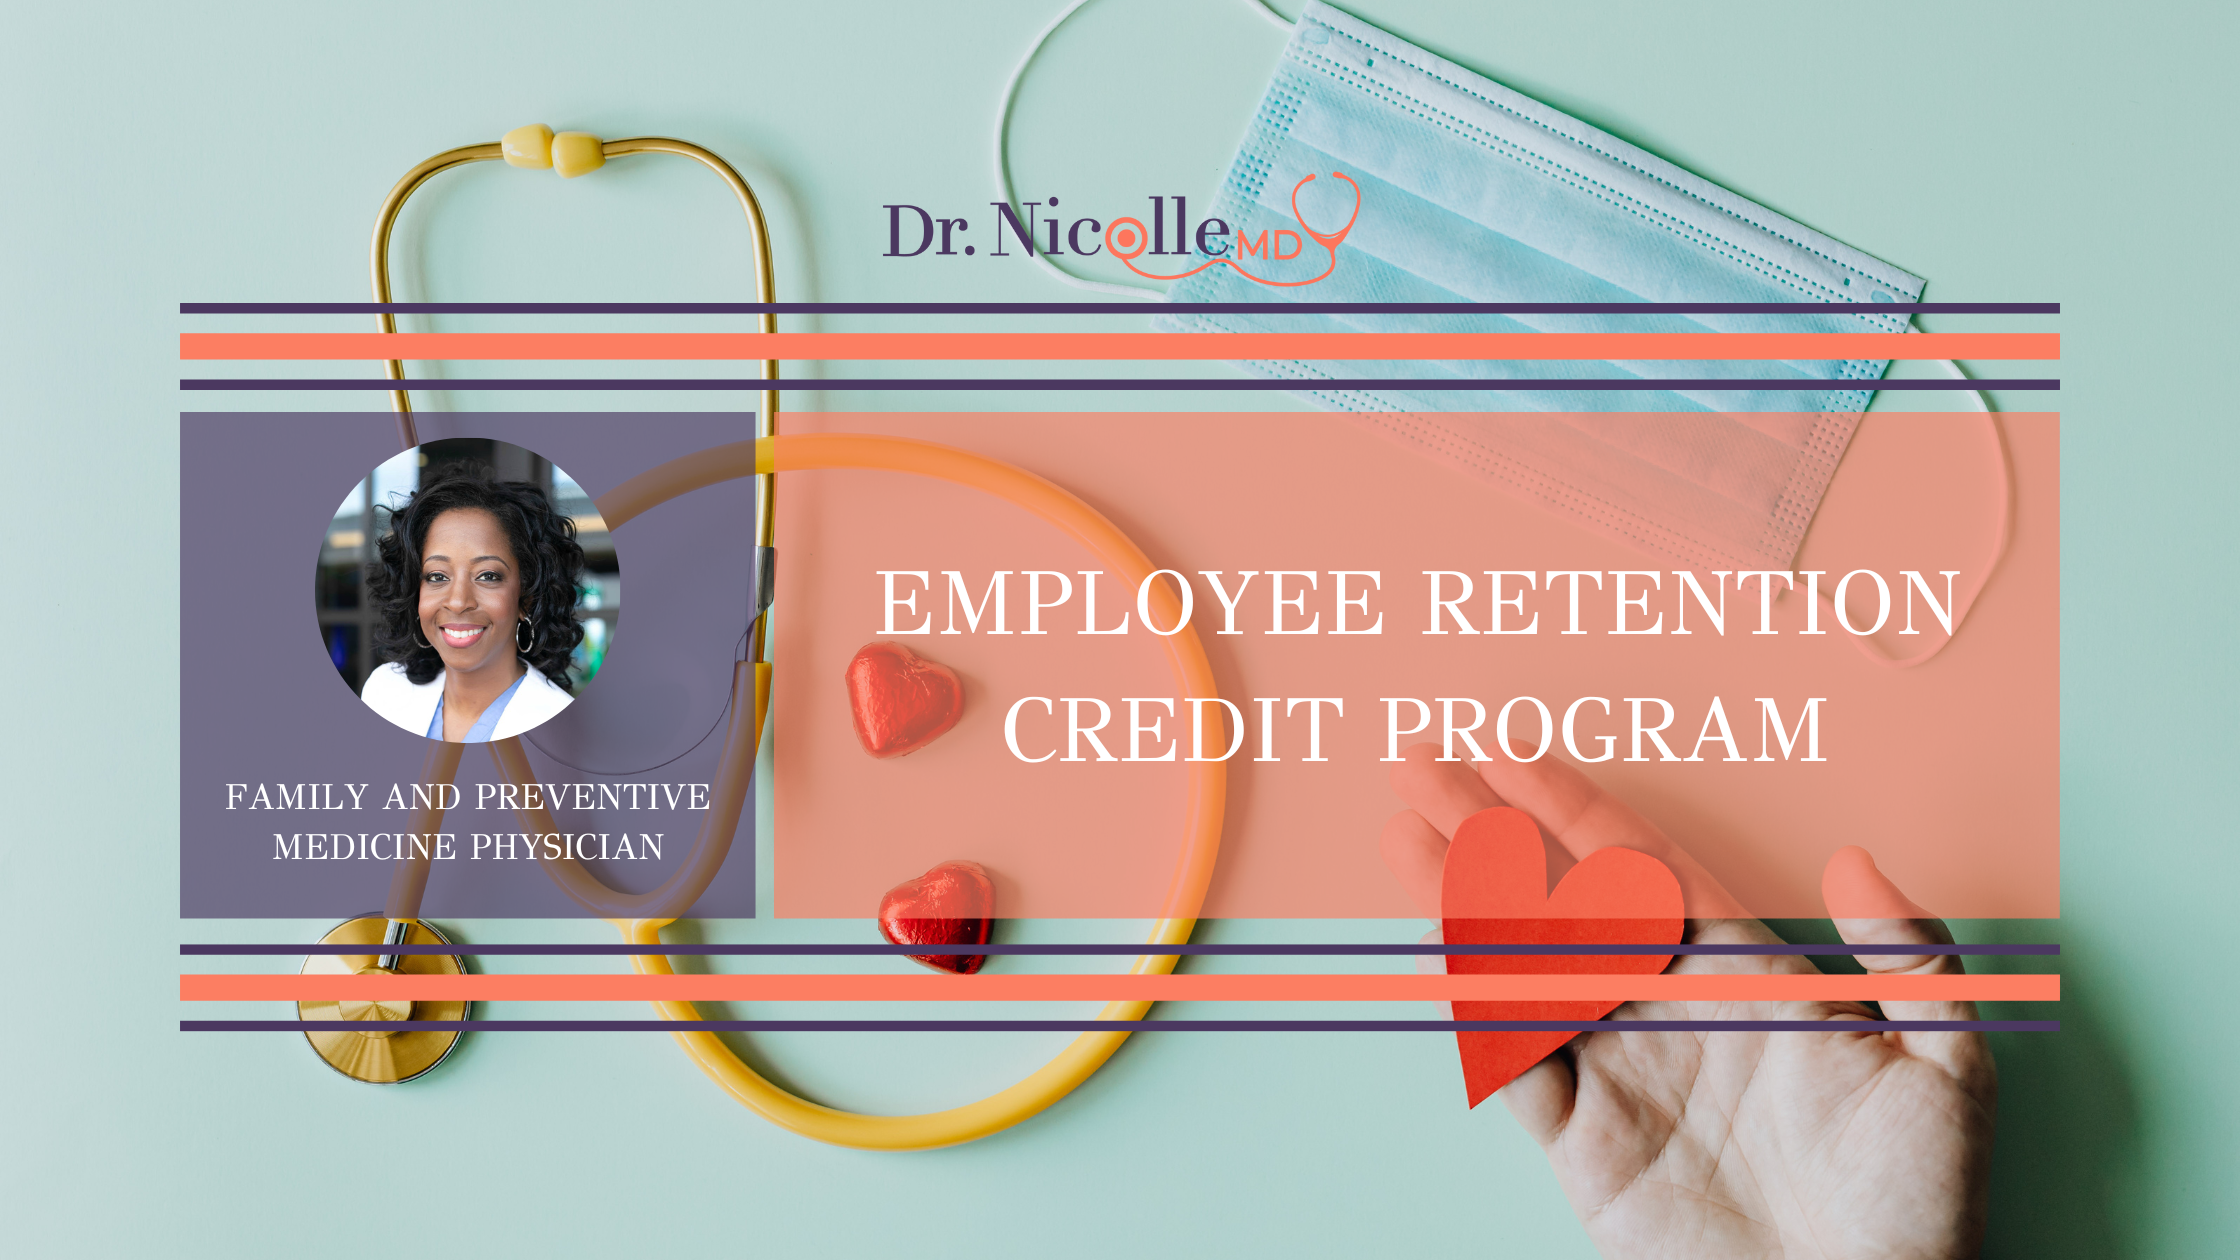 11Employee Retention Credit Program